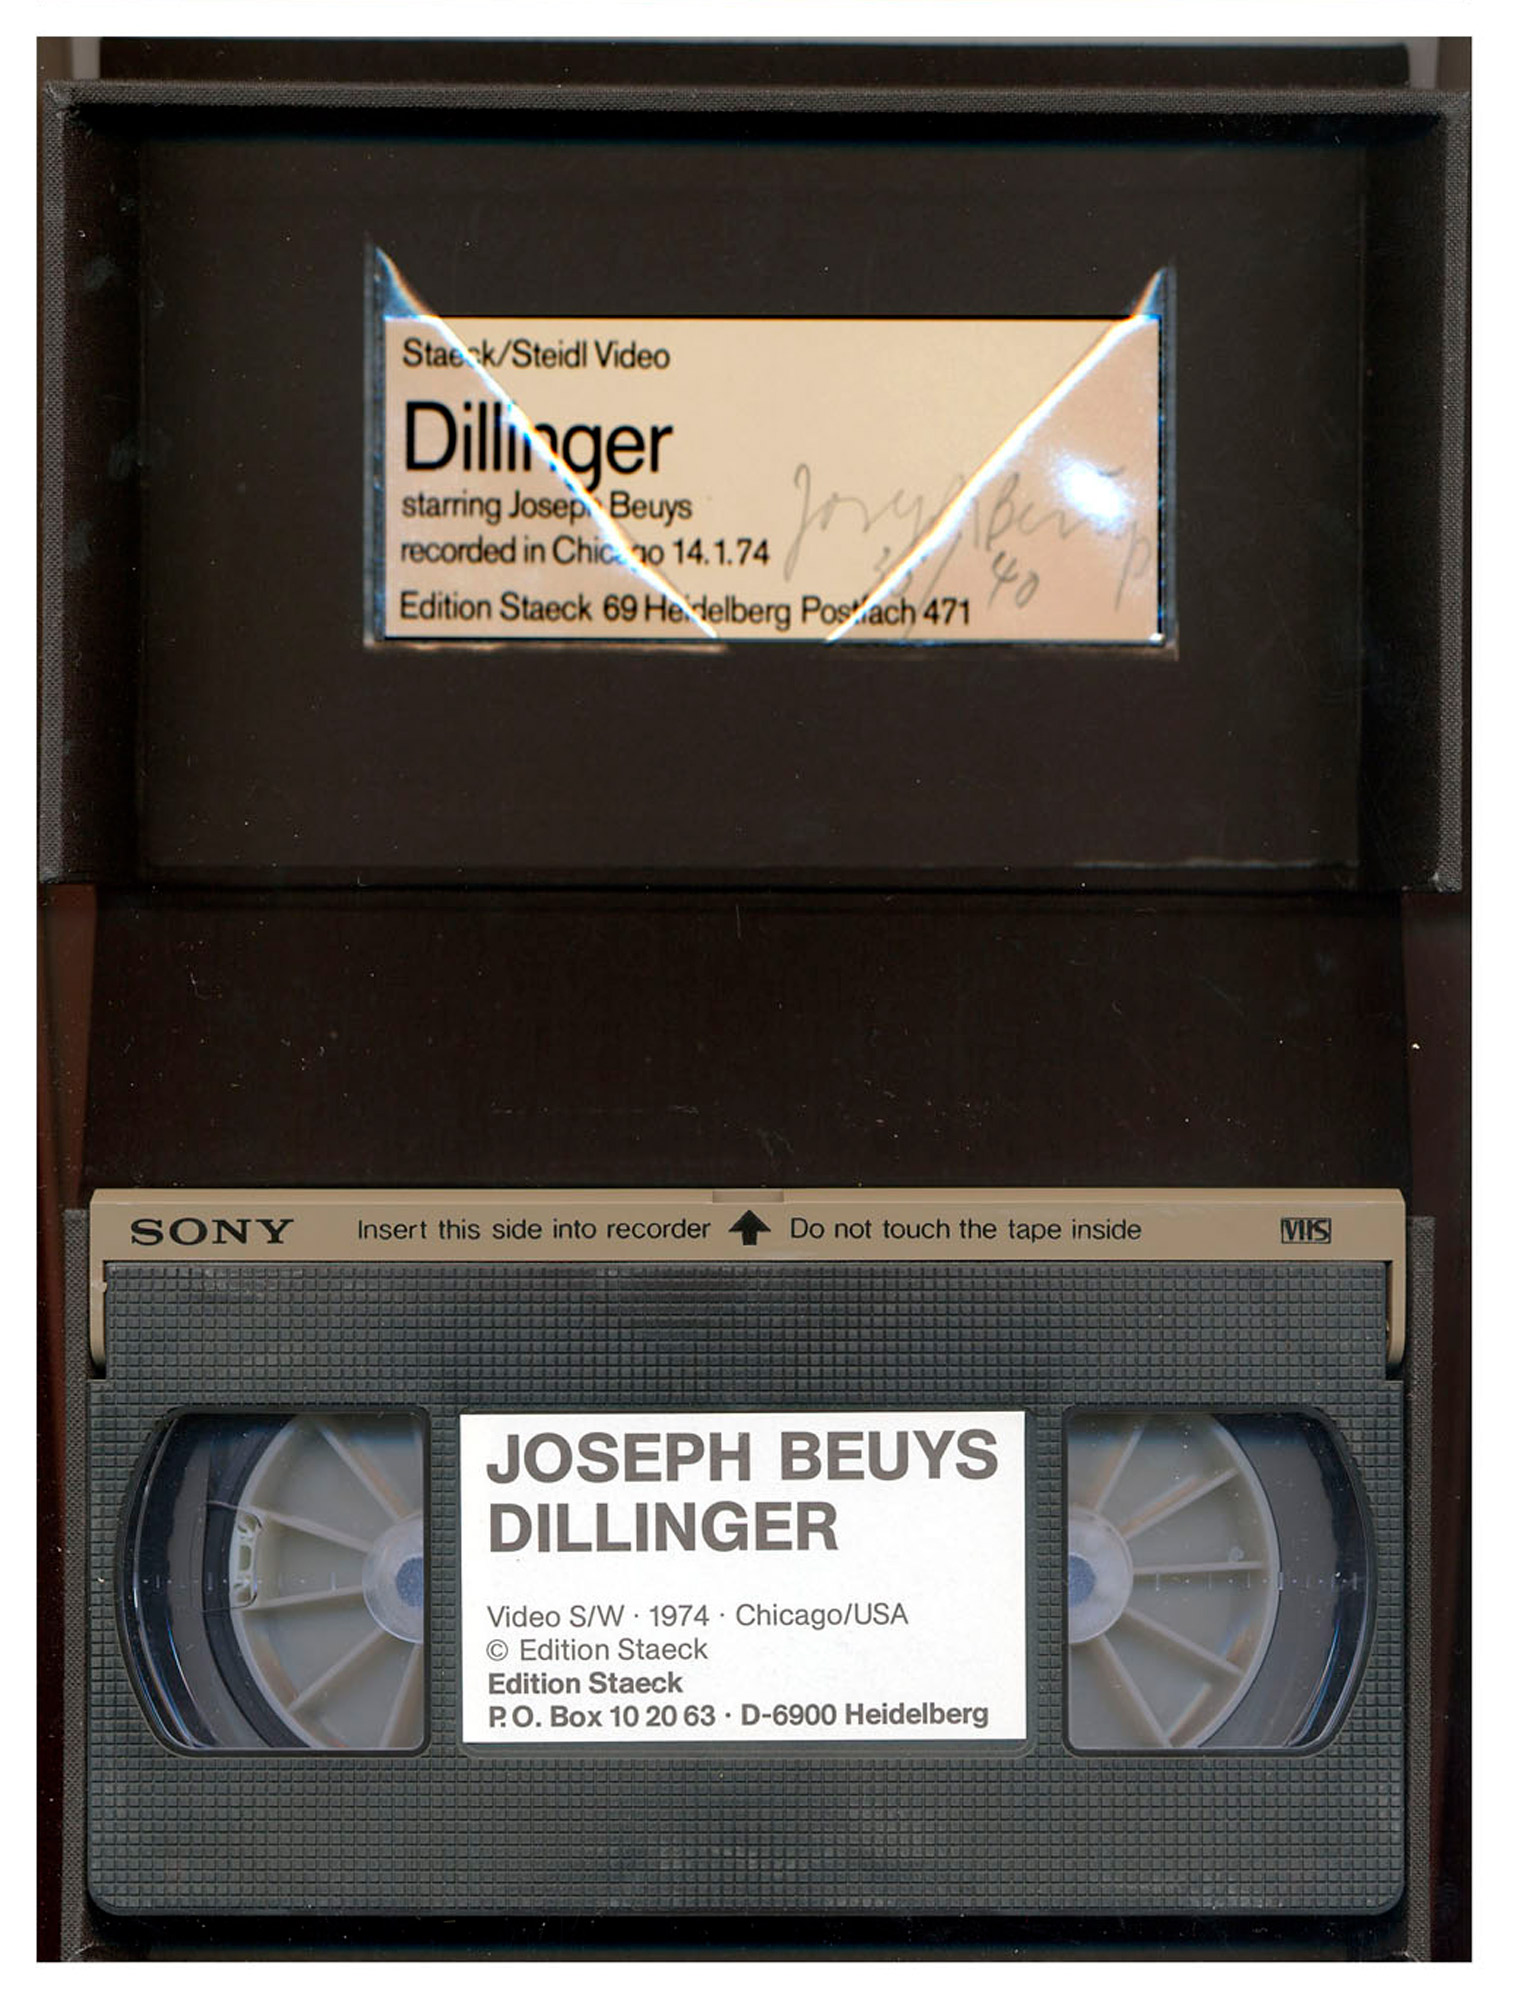 Objekt "Dillinger Videoband VHS" (1974) von Joseph Beuys